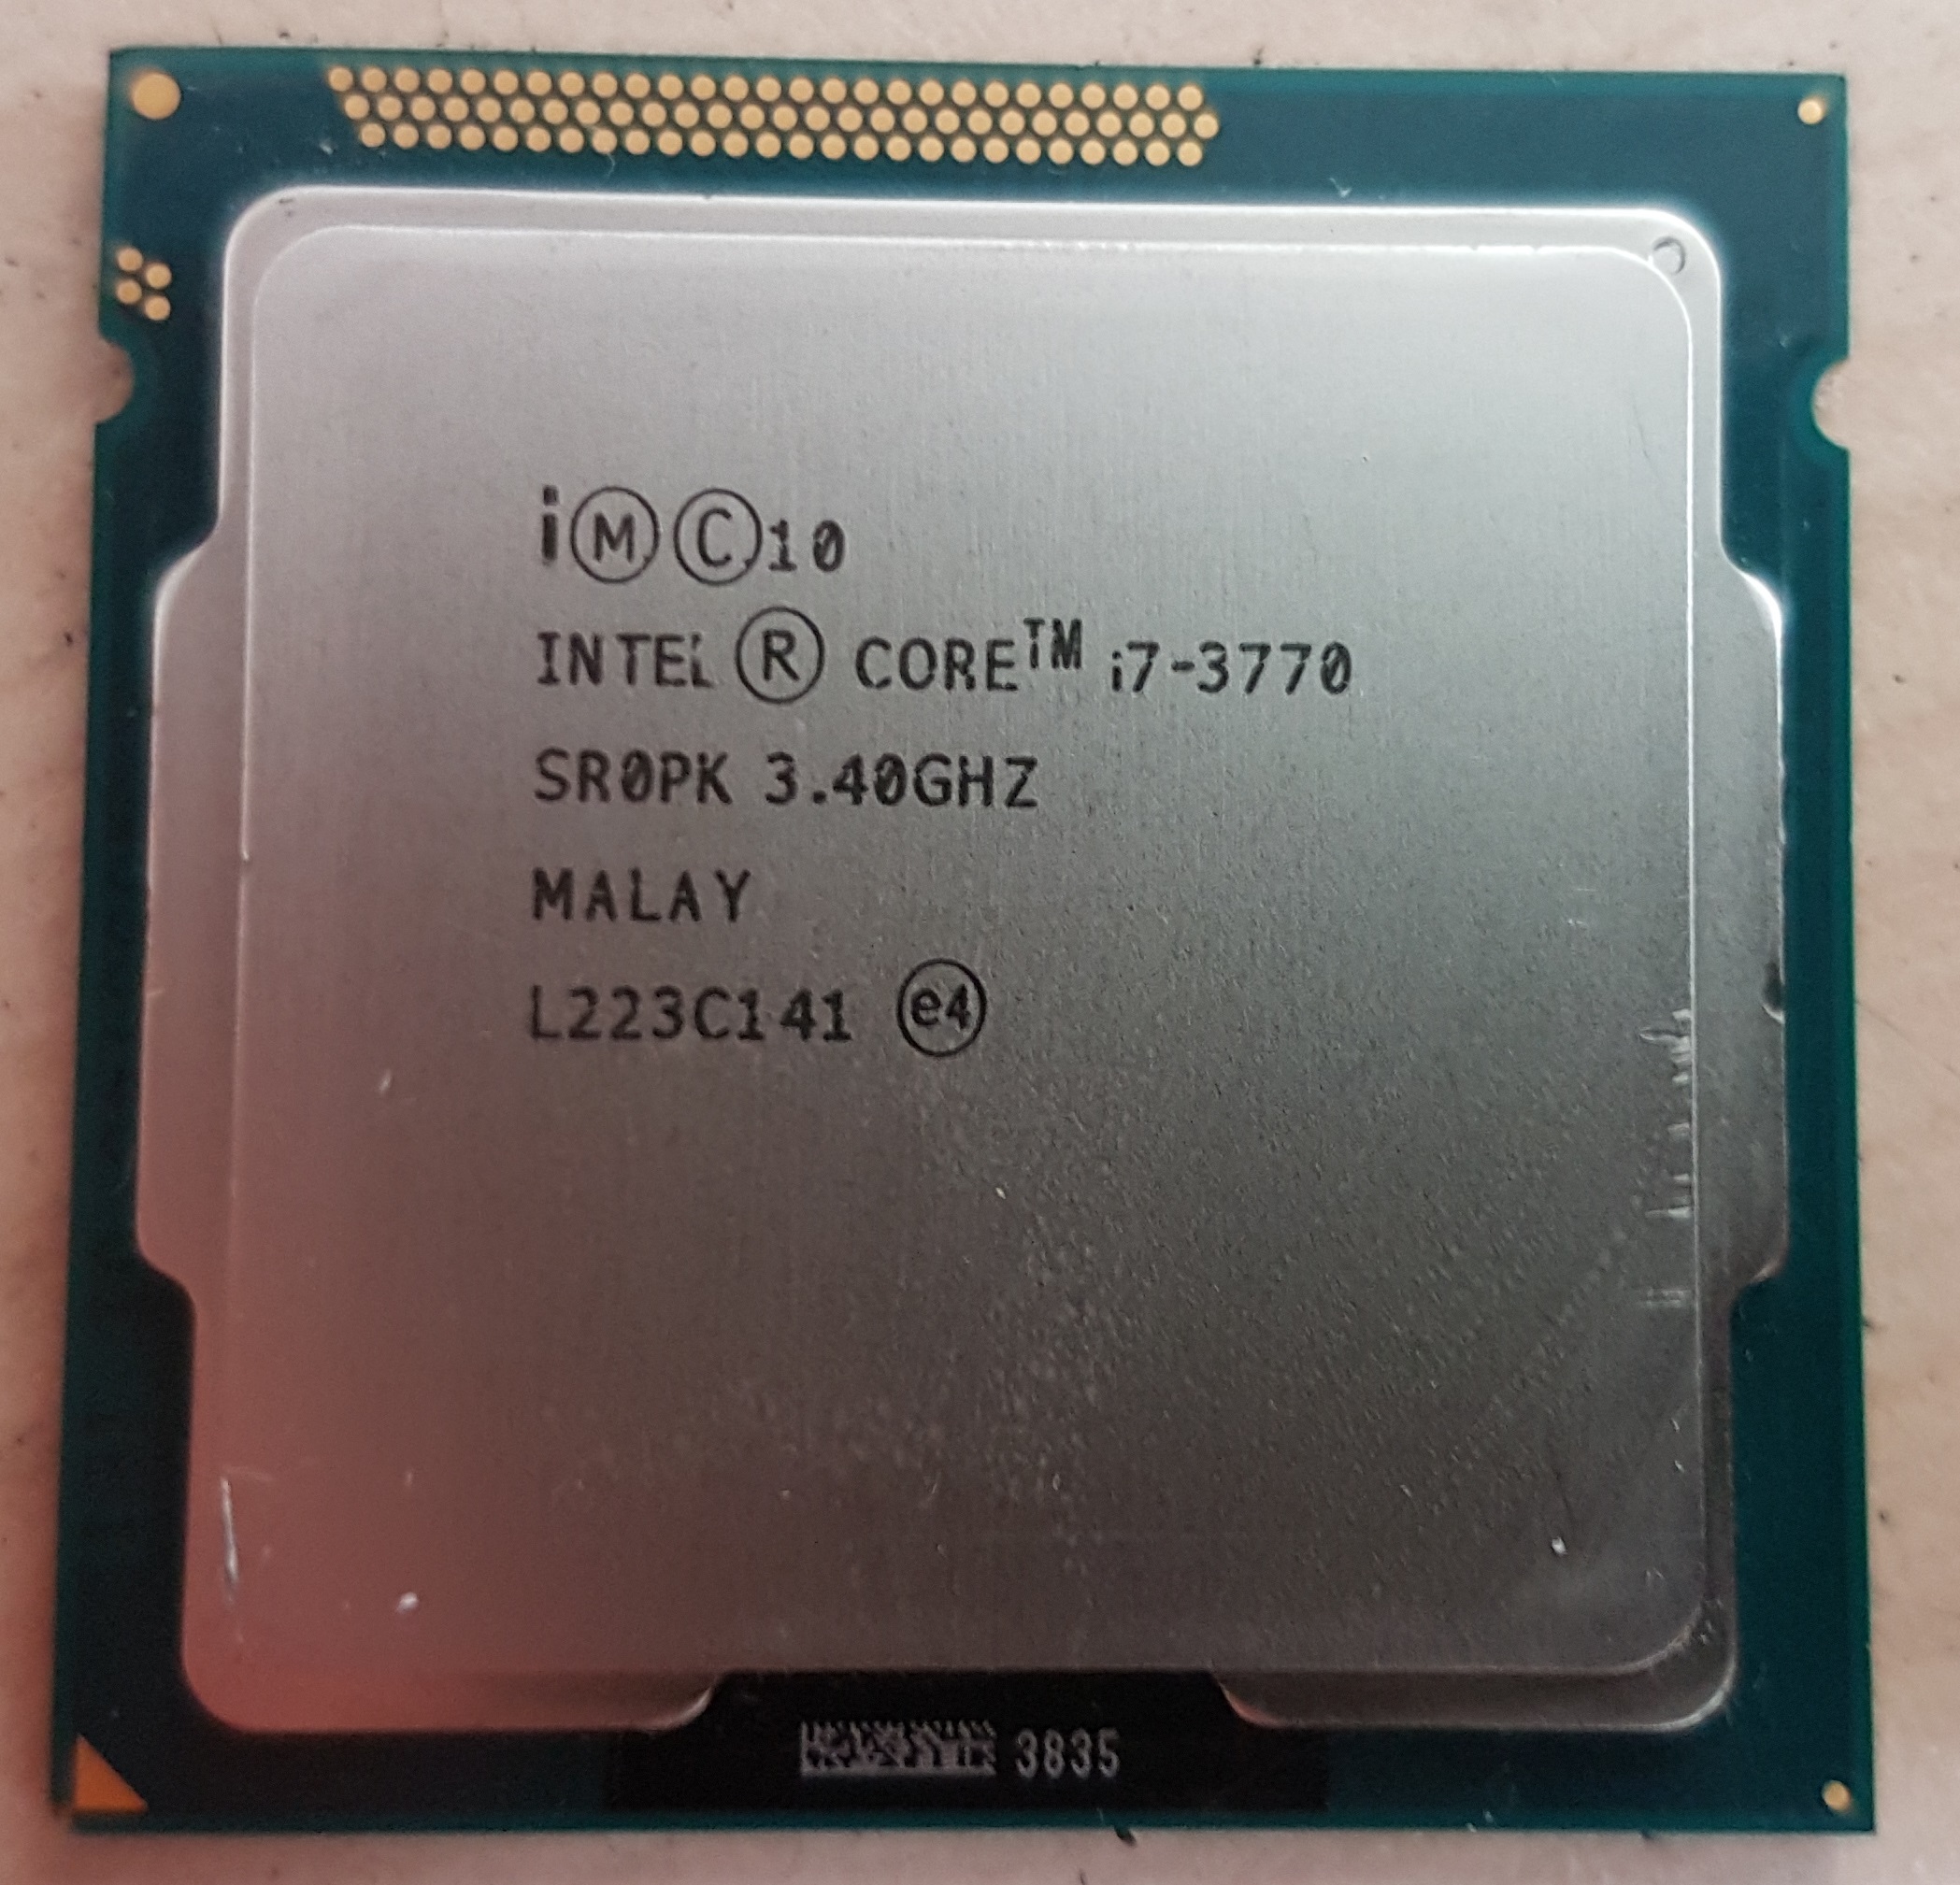 Интел i7 3770. Процессор Intel Core i7-3770. Intel CPU Core i7 3770. Intel Core i7-3770 lga1155, 4 x 3400 МГЦ. Intel Core i7 3770 @ 3.40GHZ.